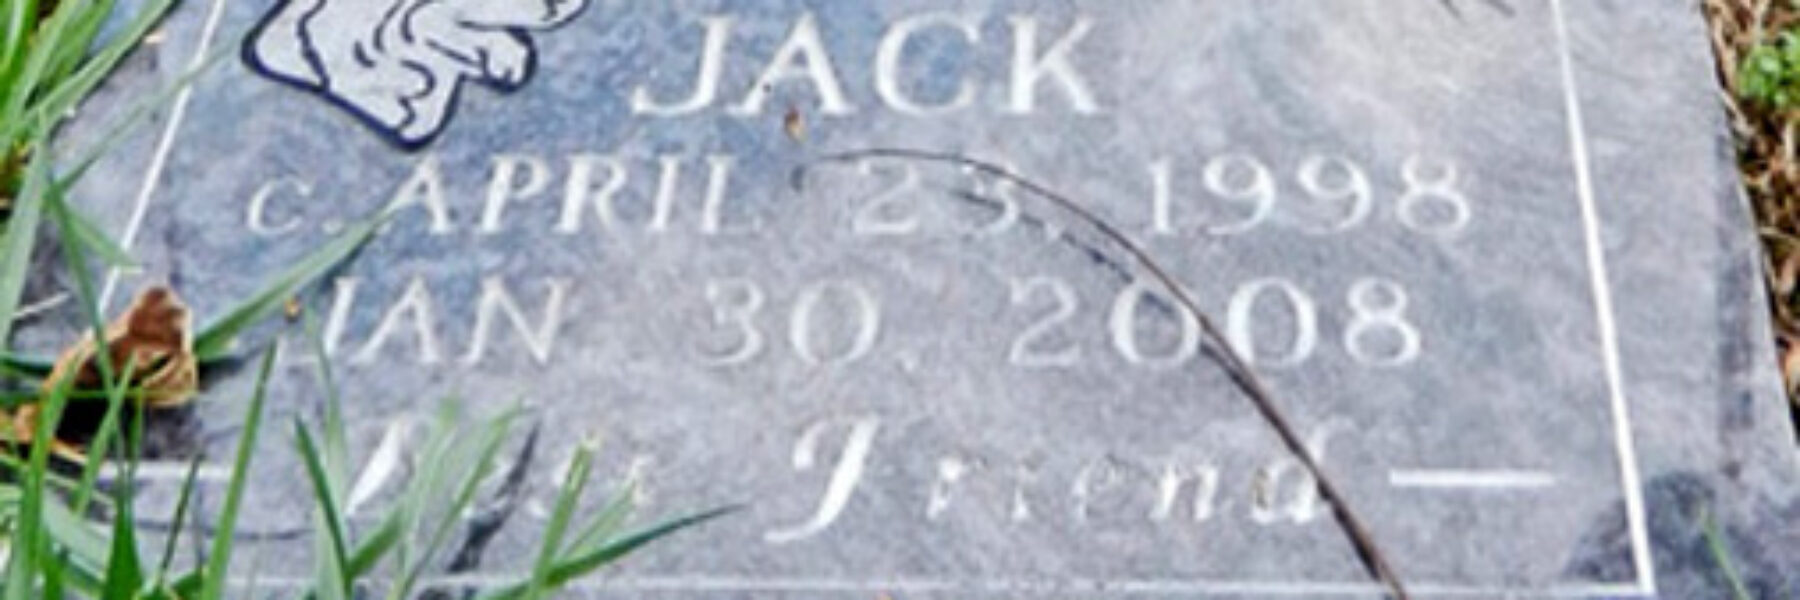 Jack 1998-2008